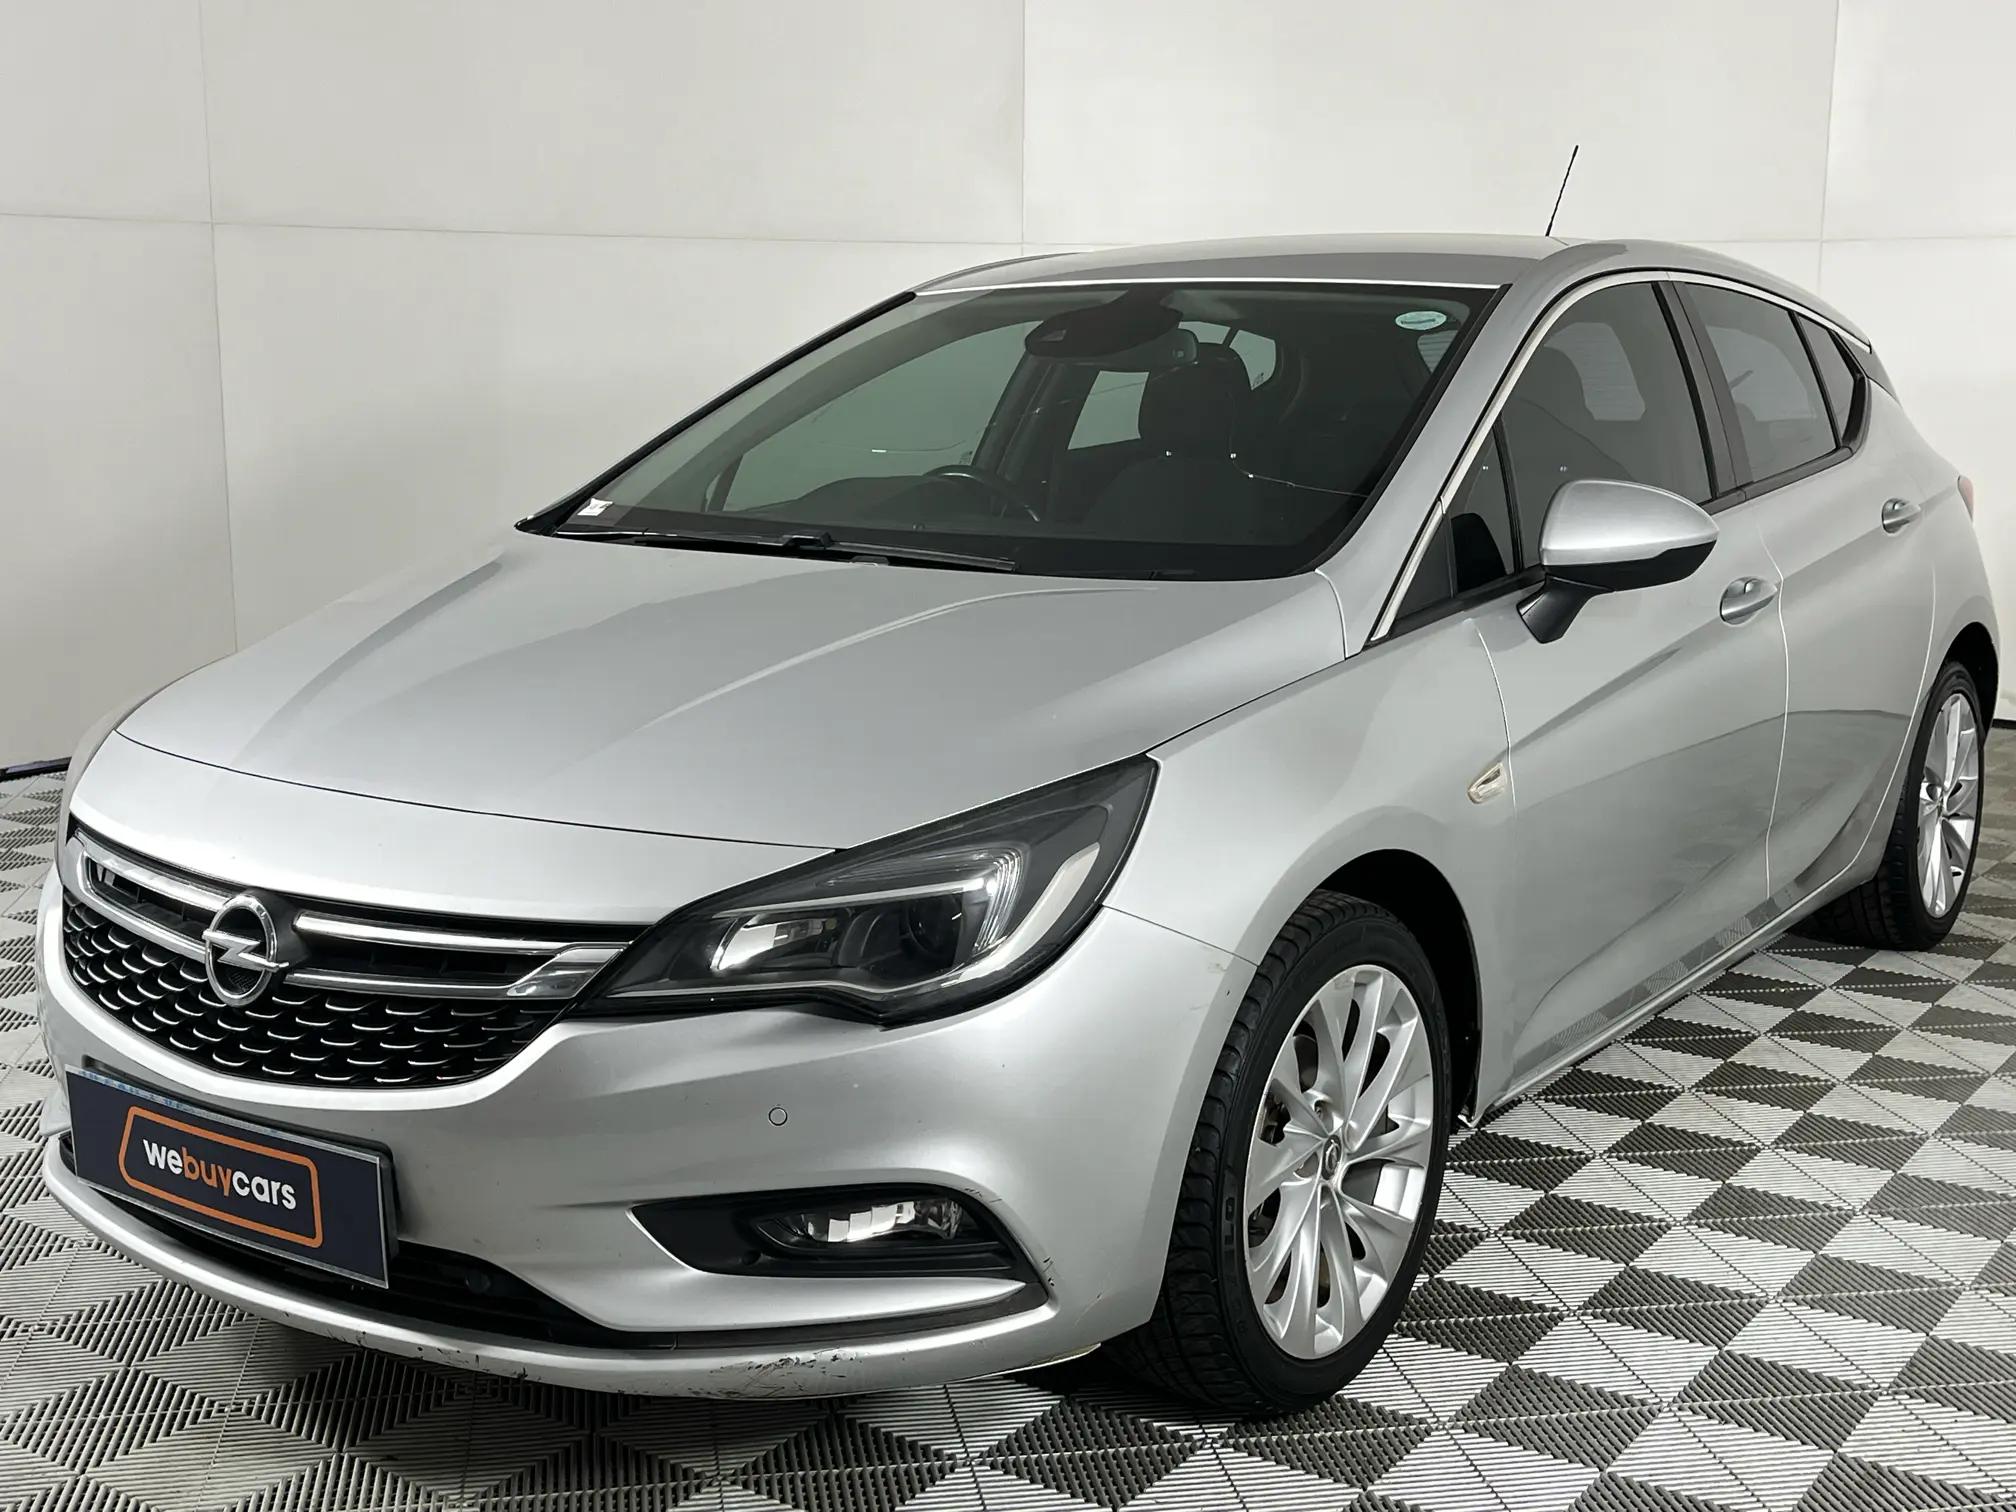 2016 Opel Astra 1.4T Enjoy (5dr)